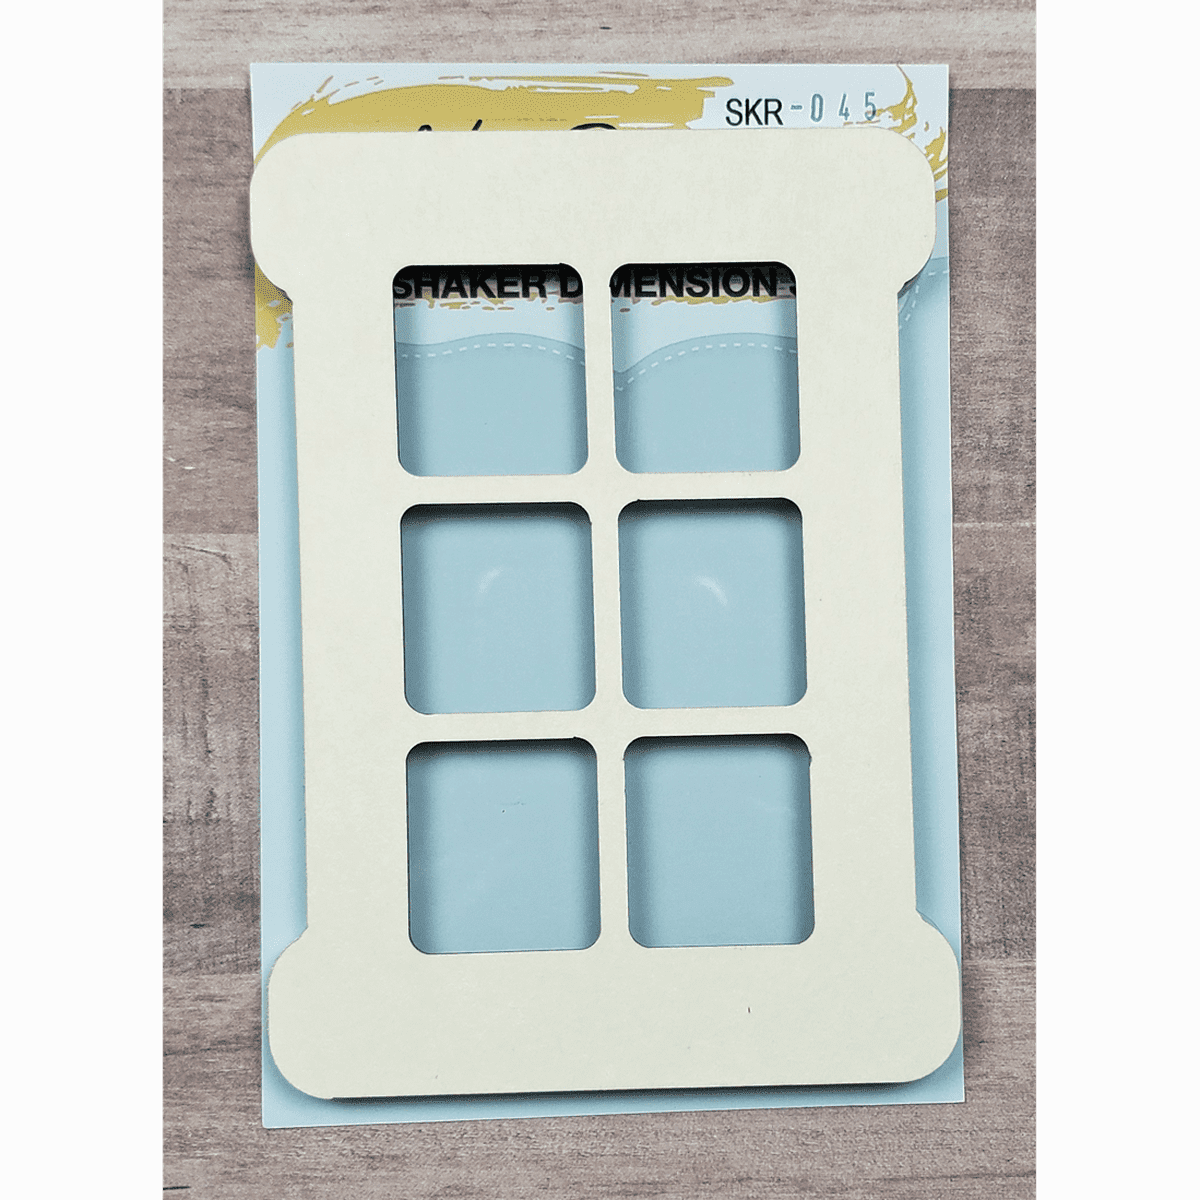 Six Pane Window Shaker Card Kit - 045